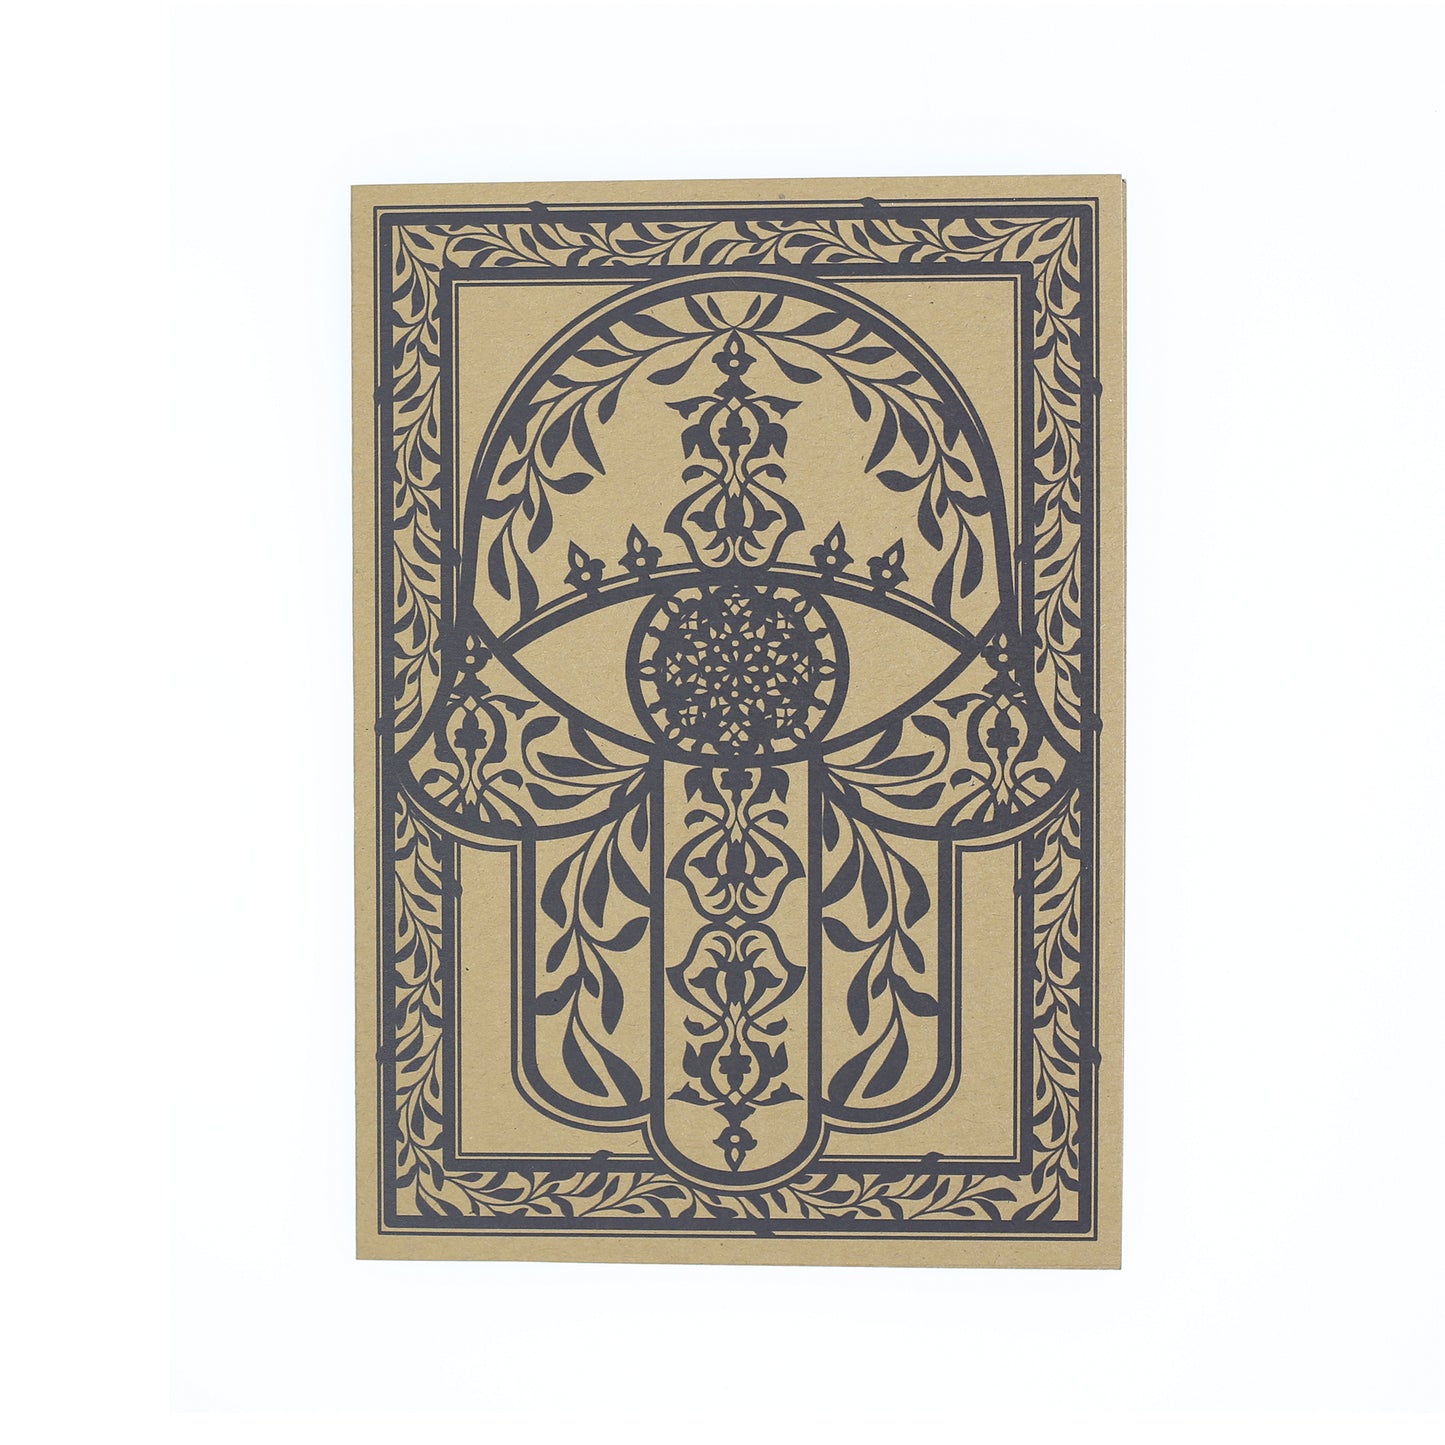 Hamsa Greeting Card - Judaica - Hamsa Evil Eye Blessing Ornamental - 7"x5"